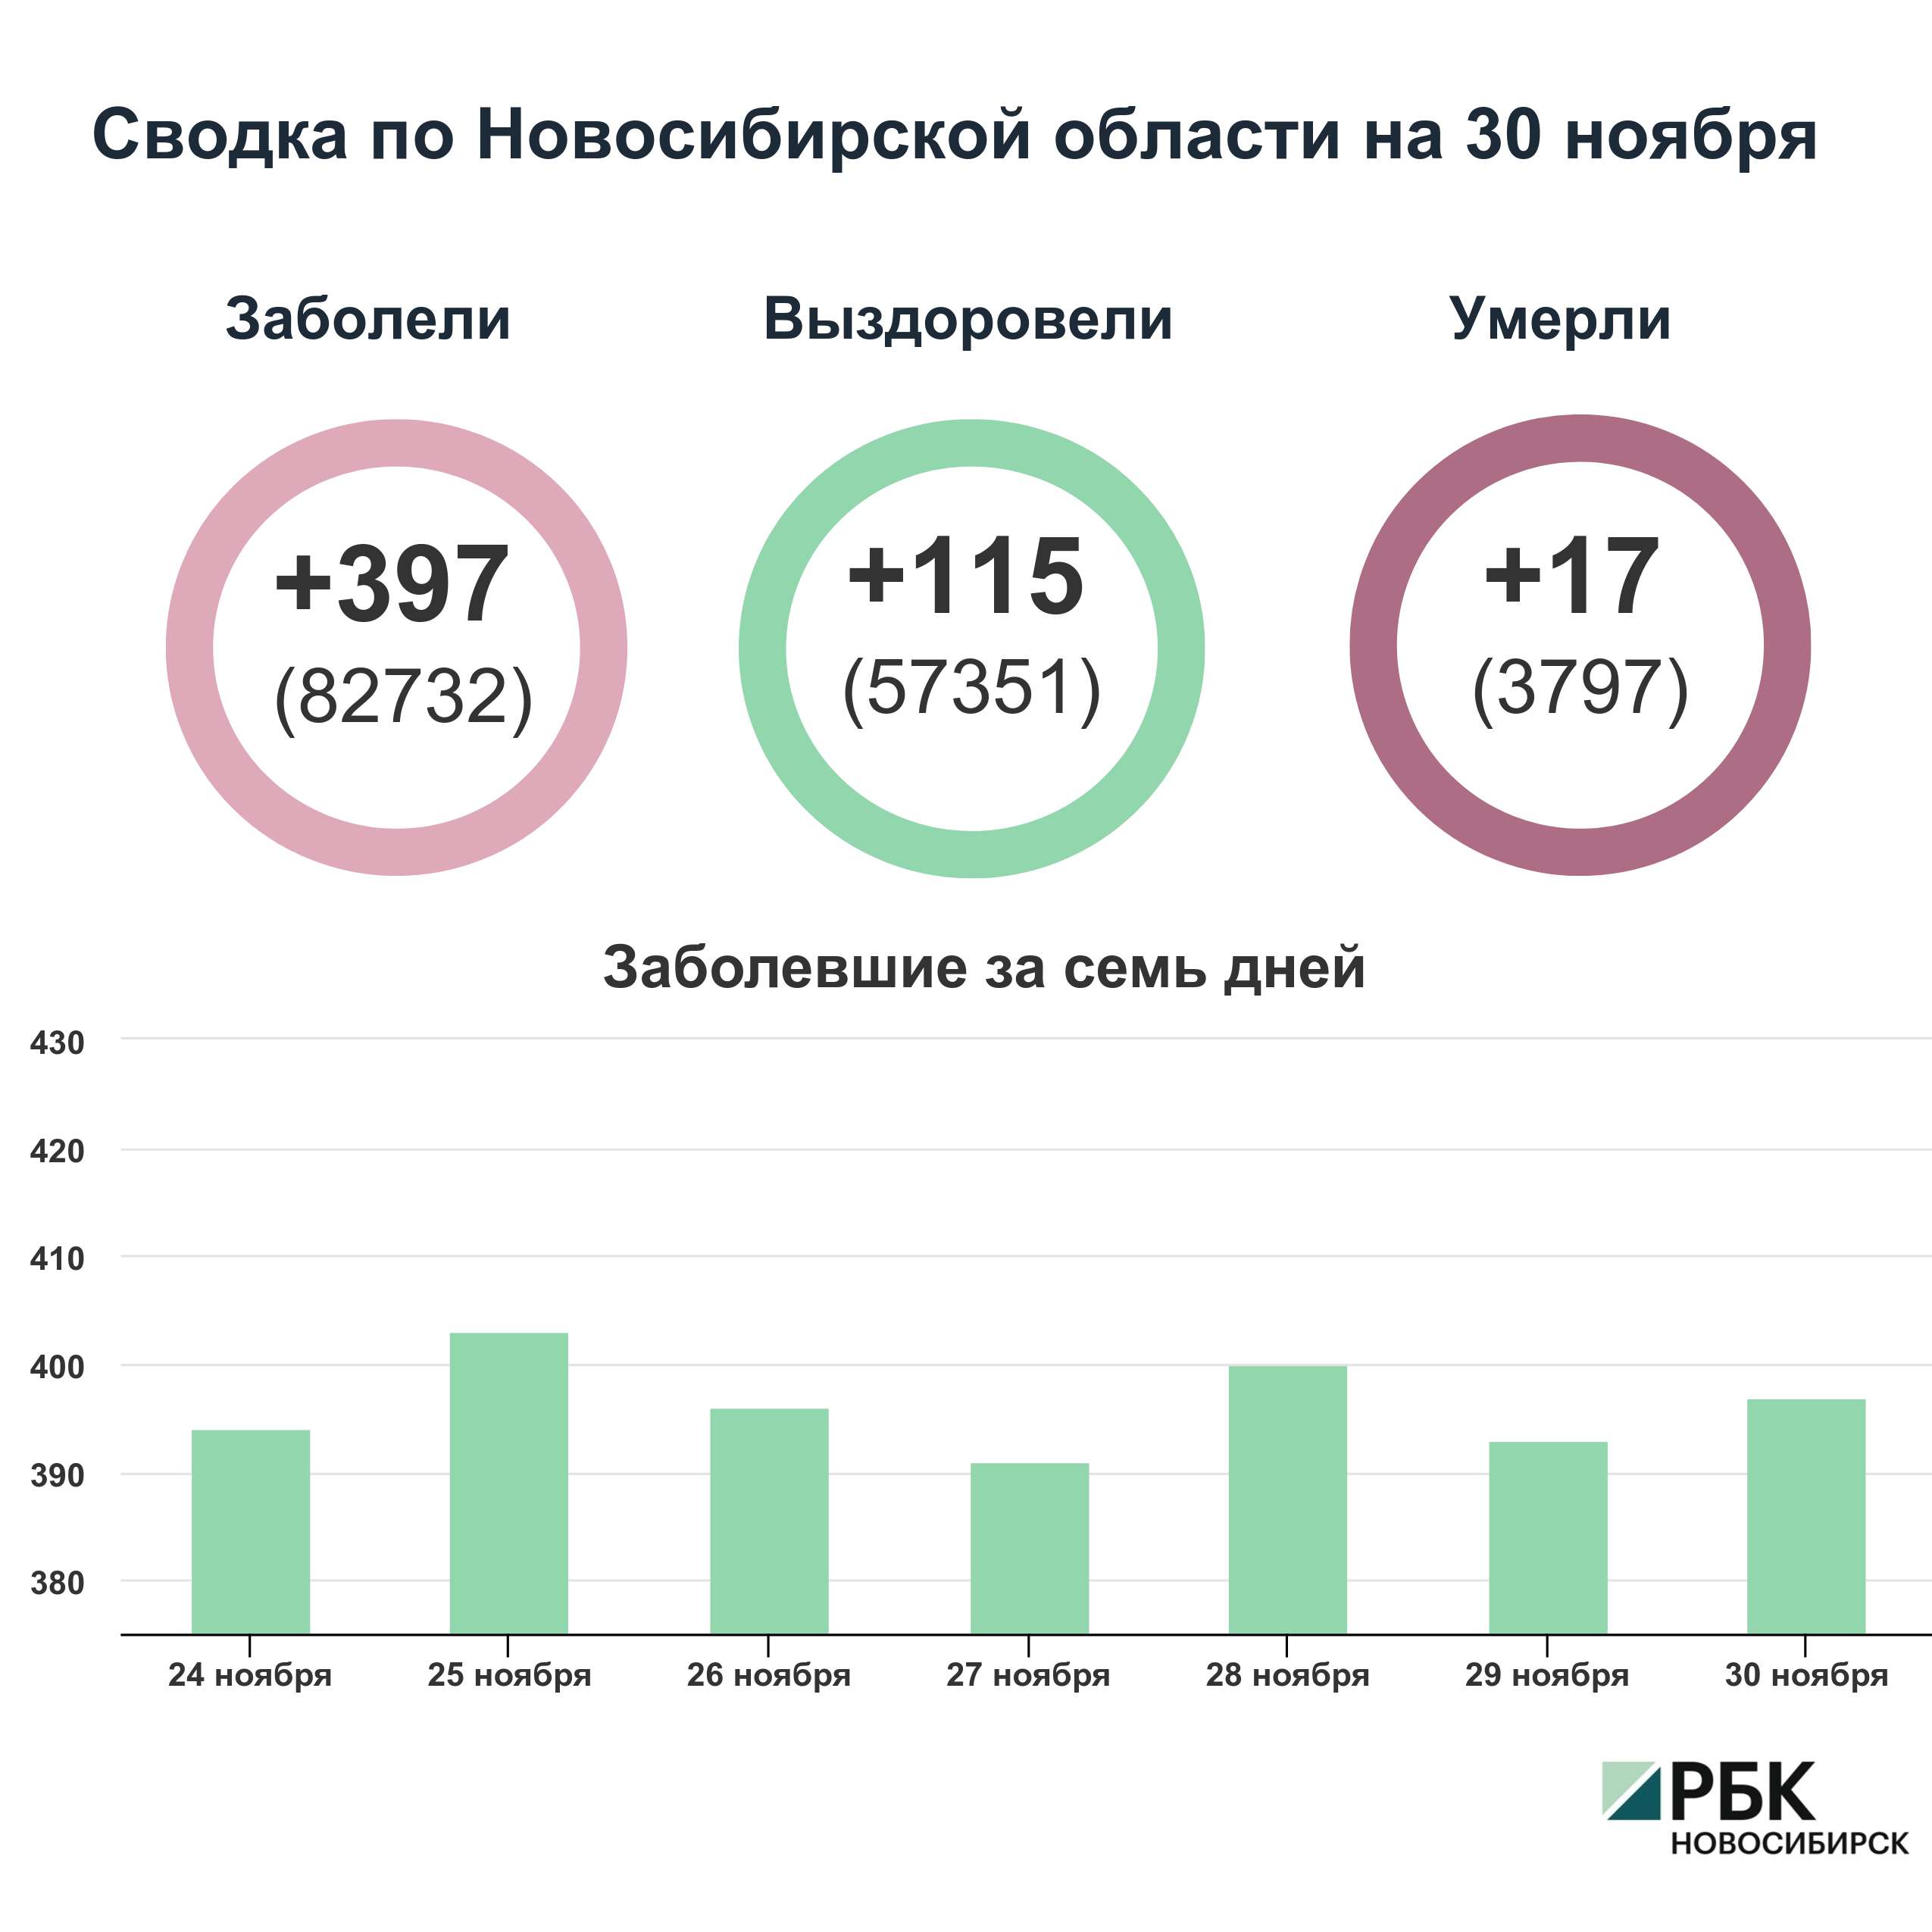 Коронавирус в Новосибирске: сводка на 30 ноября